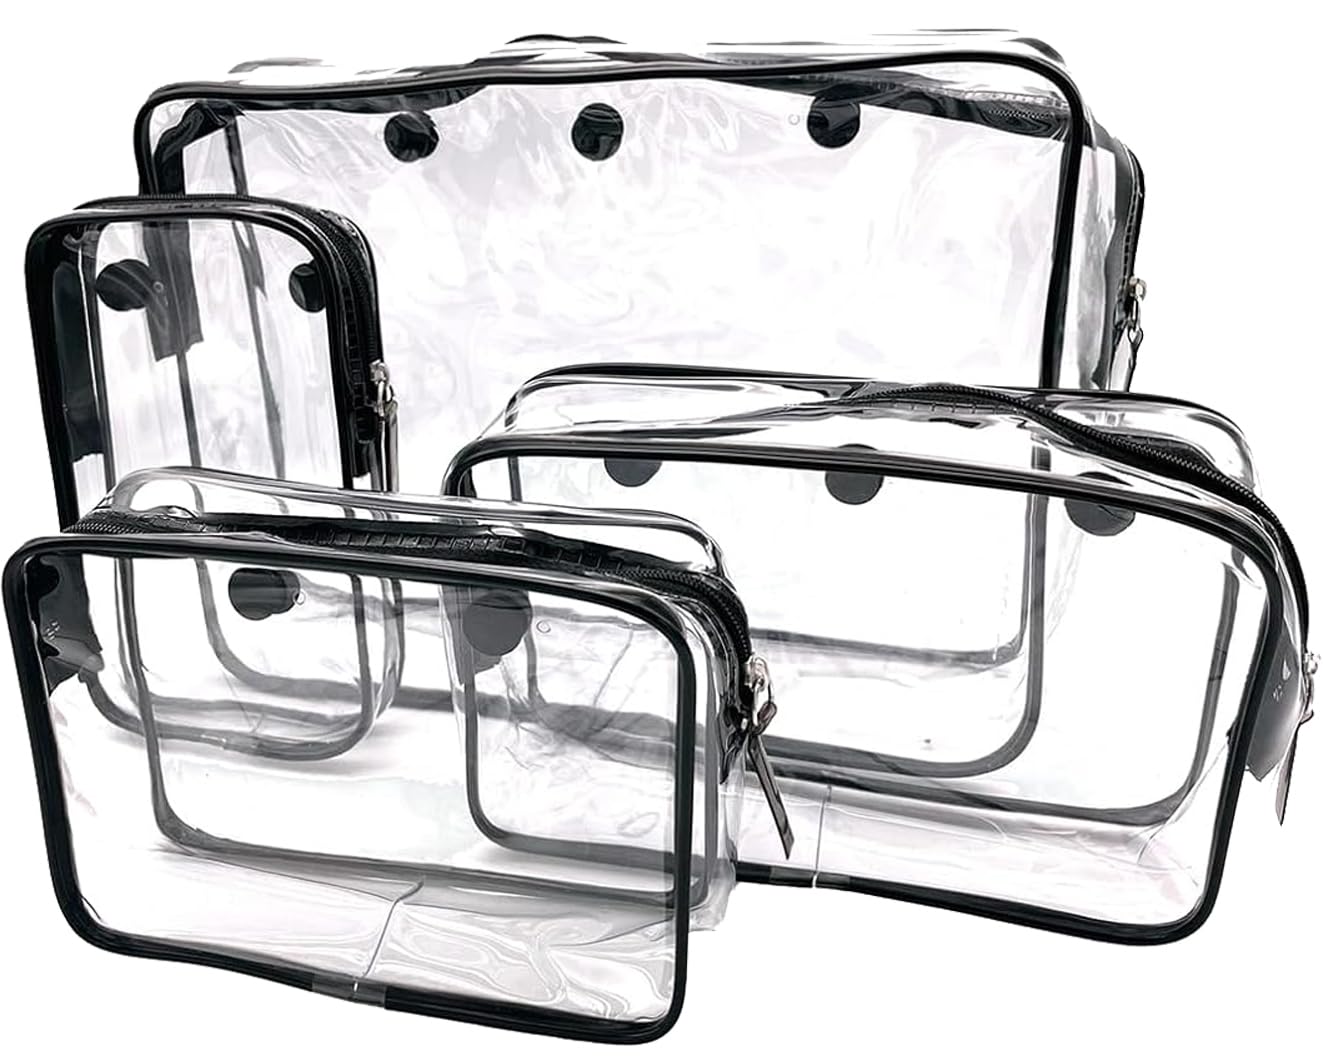 4 Pack Clear Makeup Storage Bag Beach Bag Bogg Bag Accessories whit Hooks Carabiner